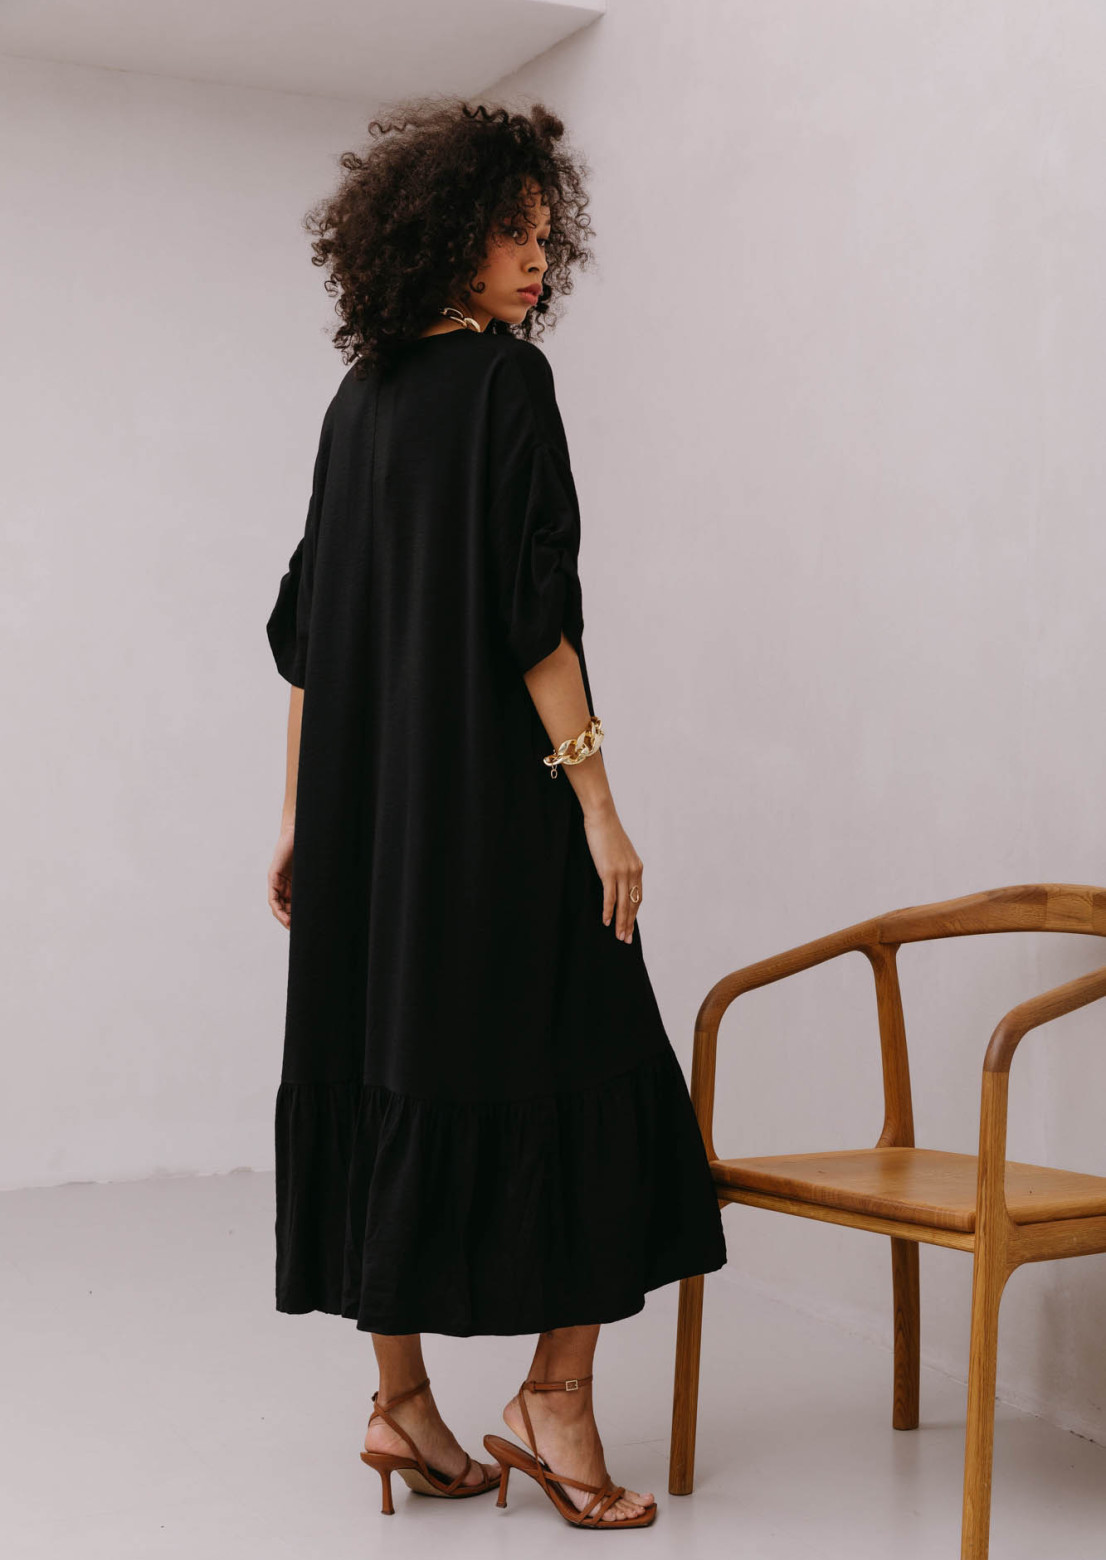 Black color voluminous elongated dress 